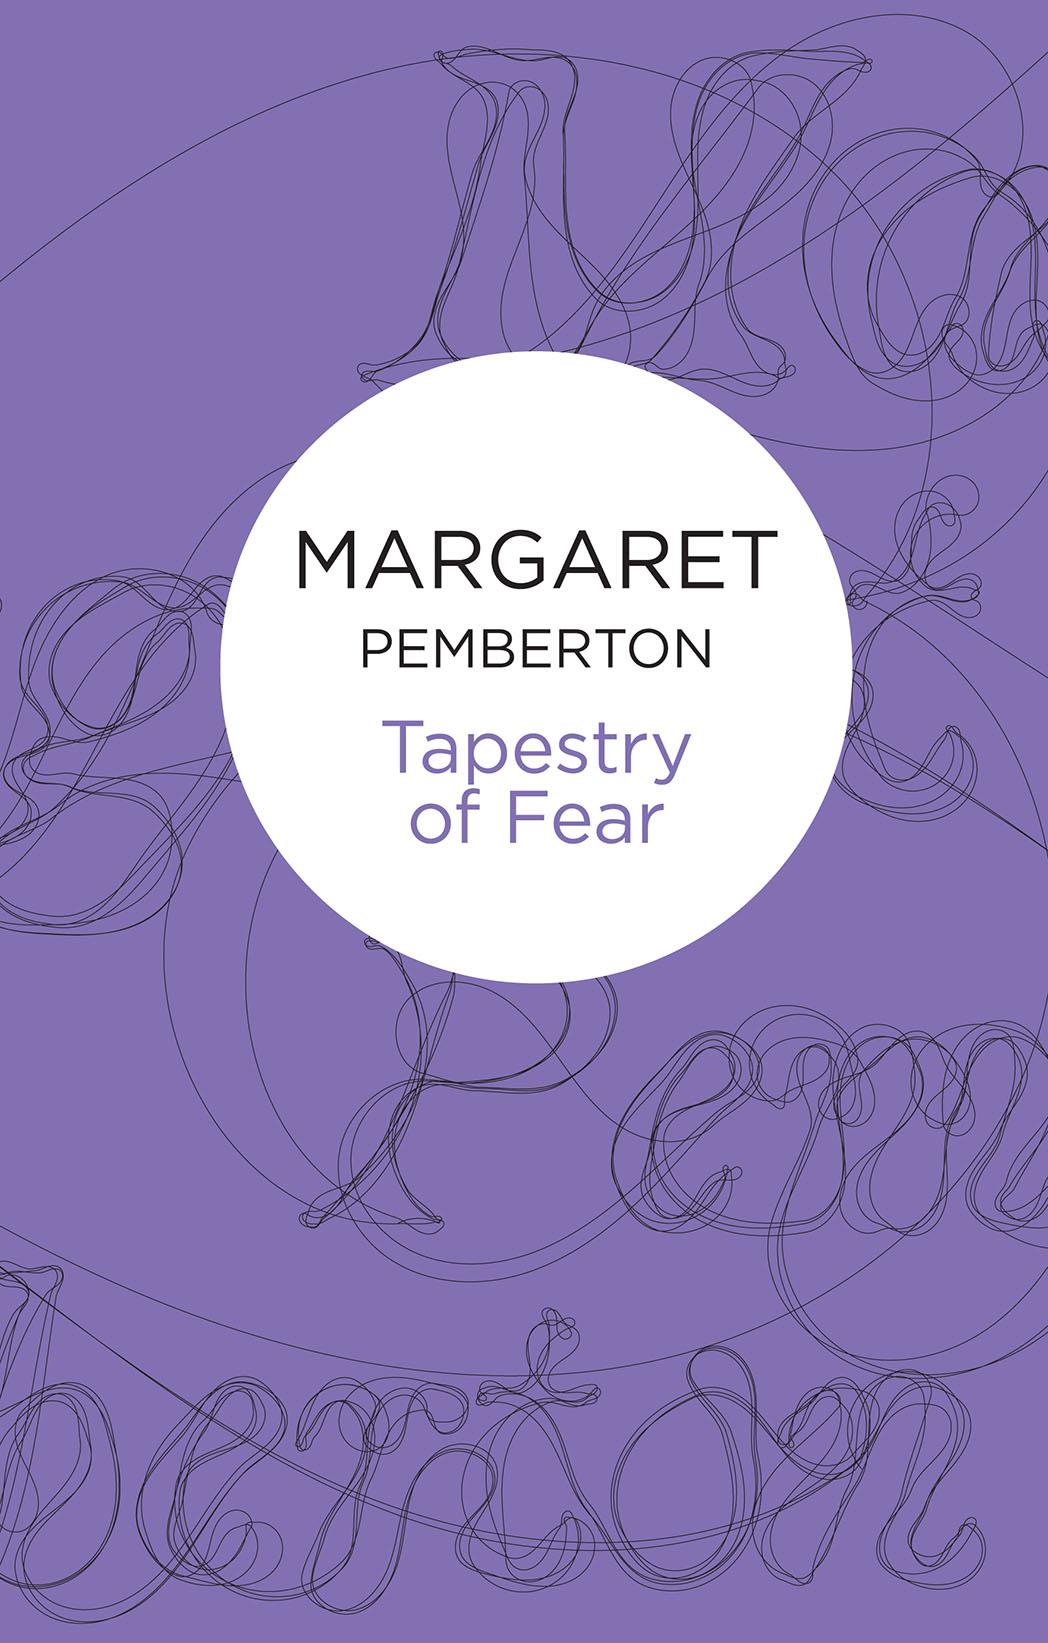 Tapestry of Fear by Margaret Pemberton